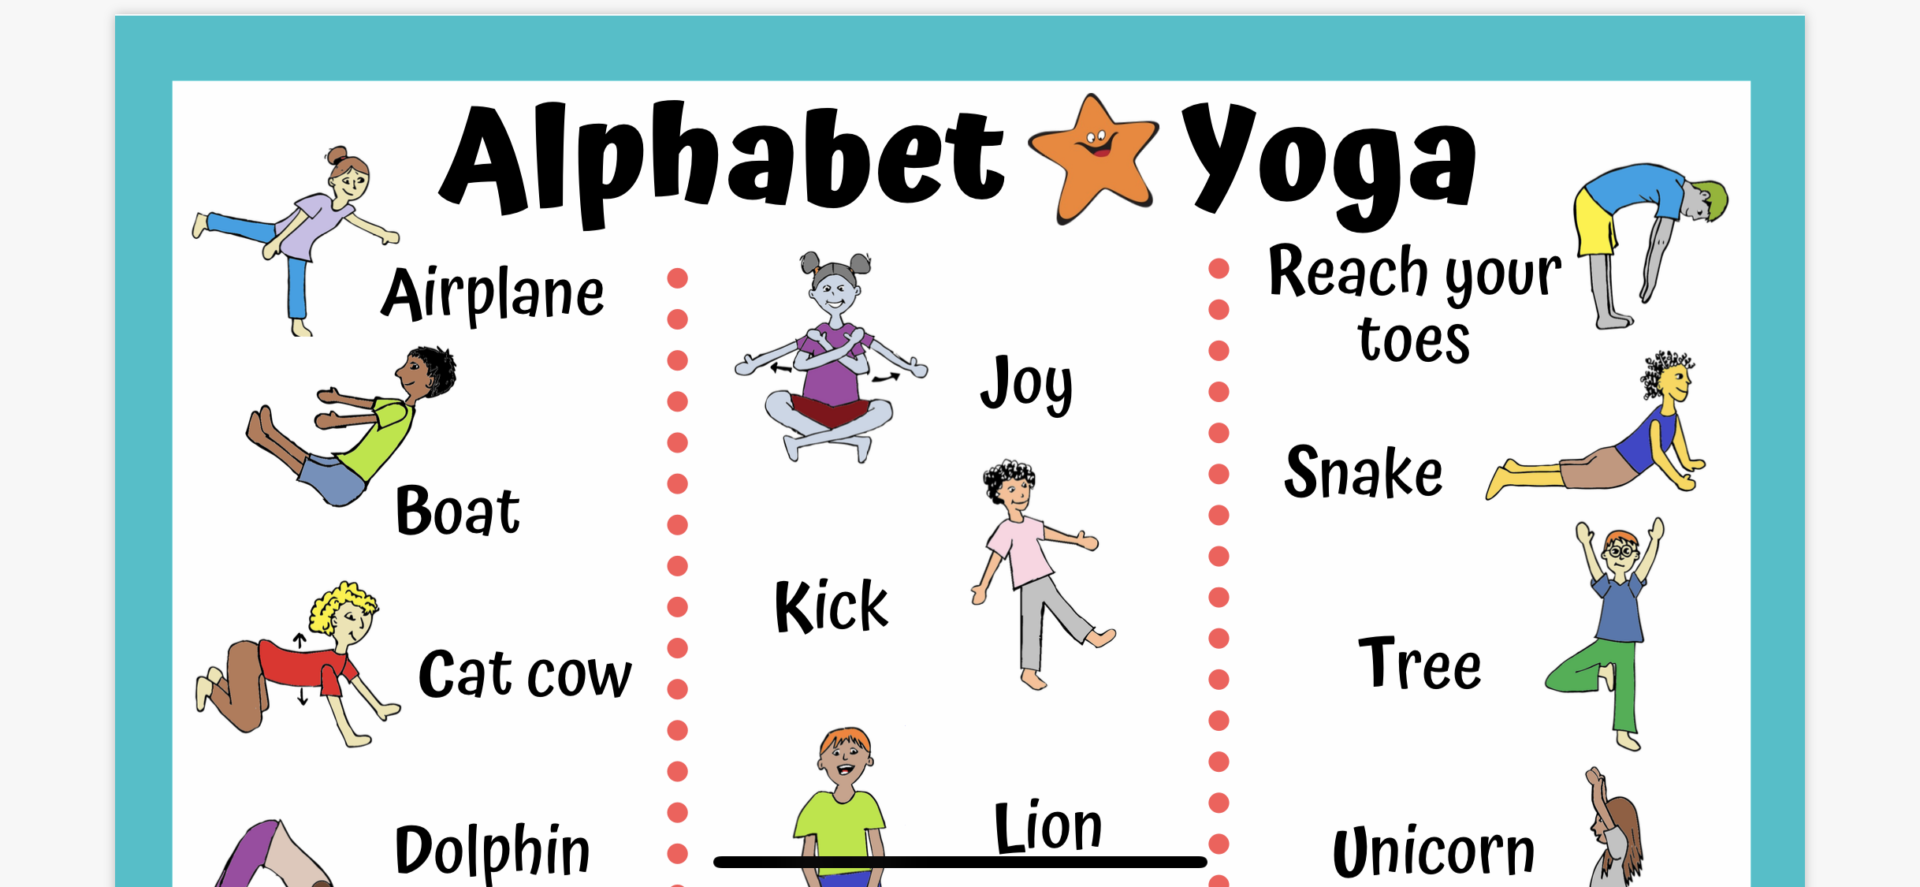 Alphabet Yoga Poses Explore The World Of Yoga And Alp - vrogue.co